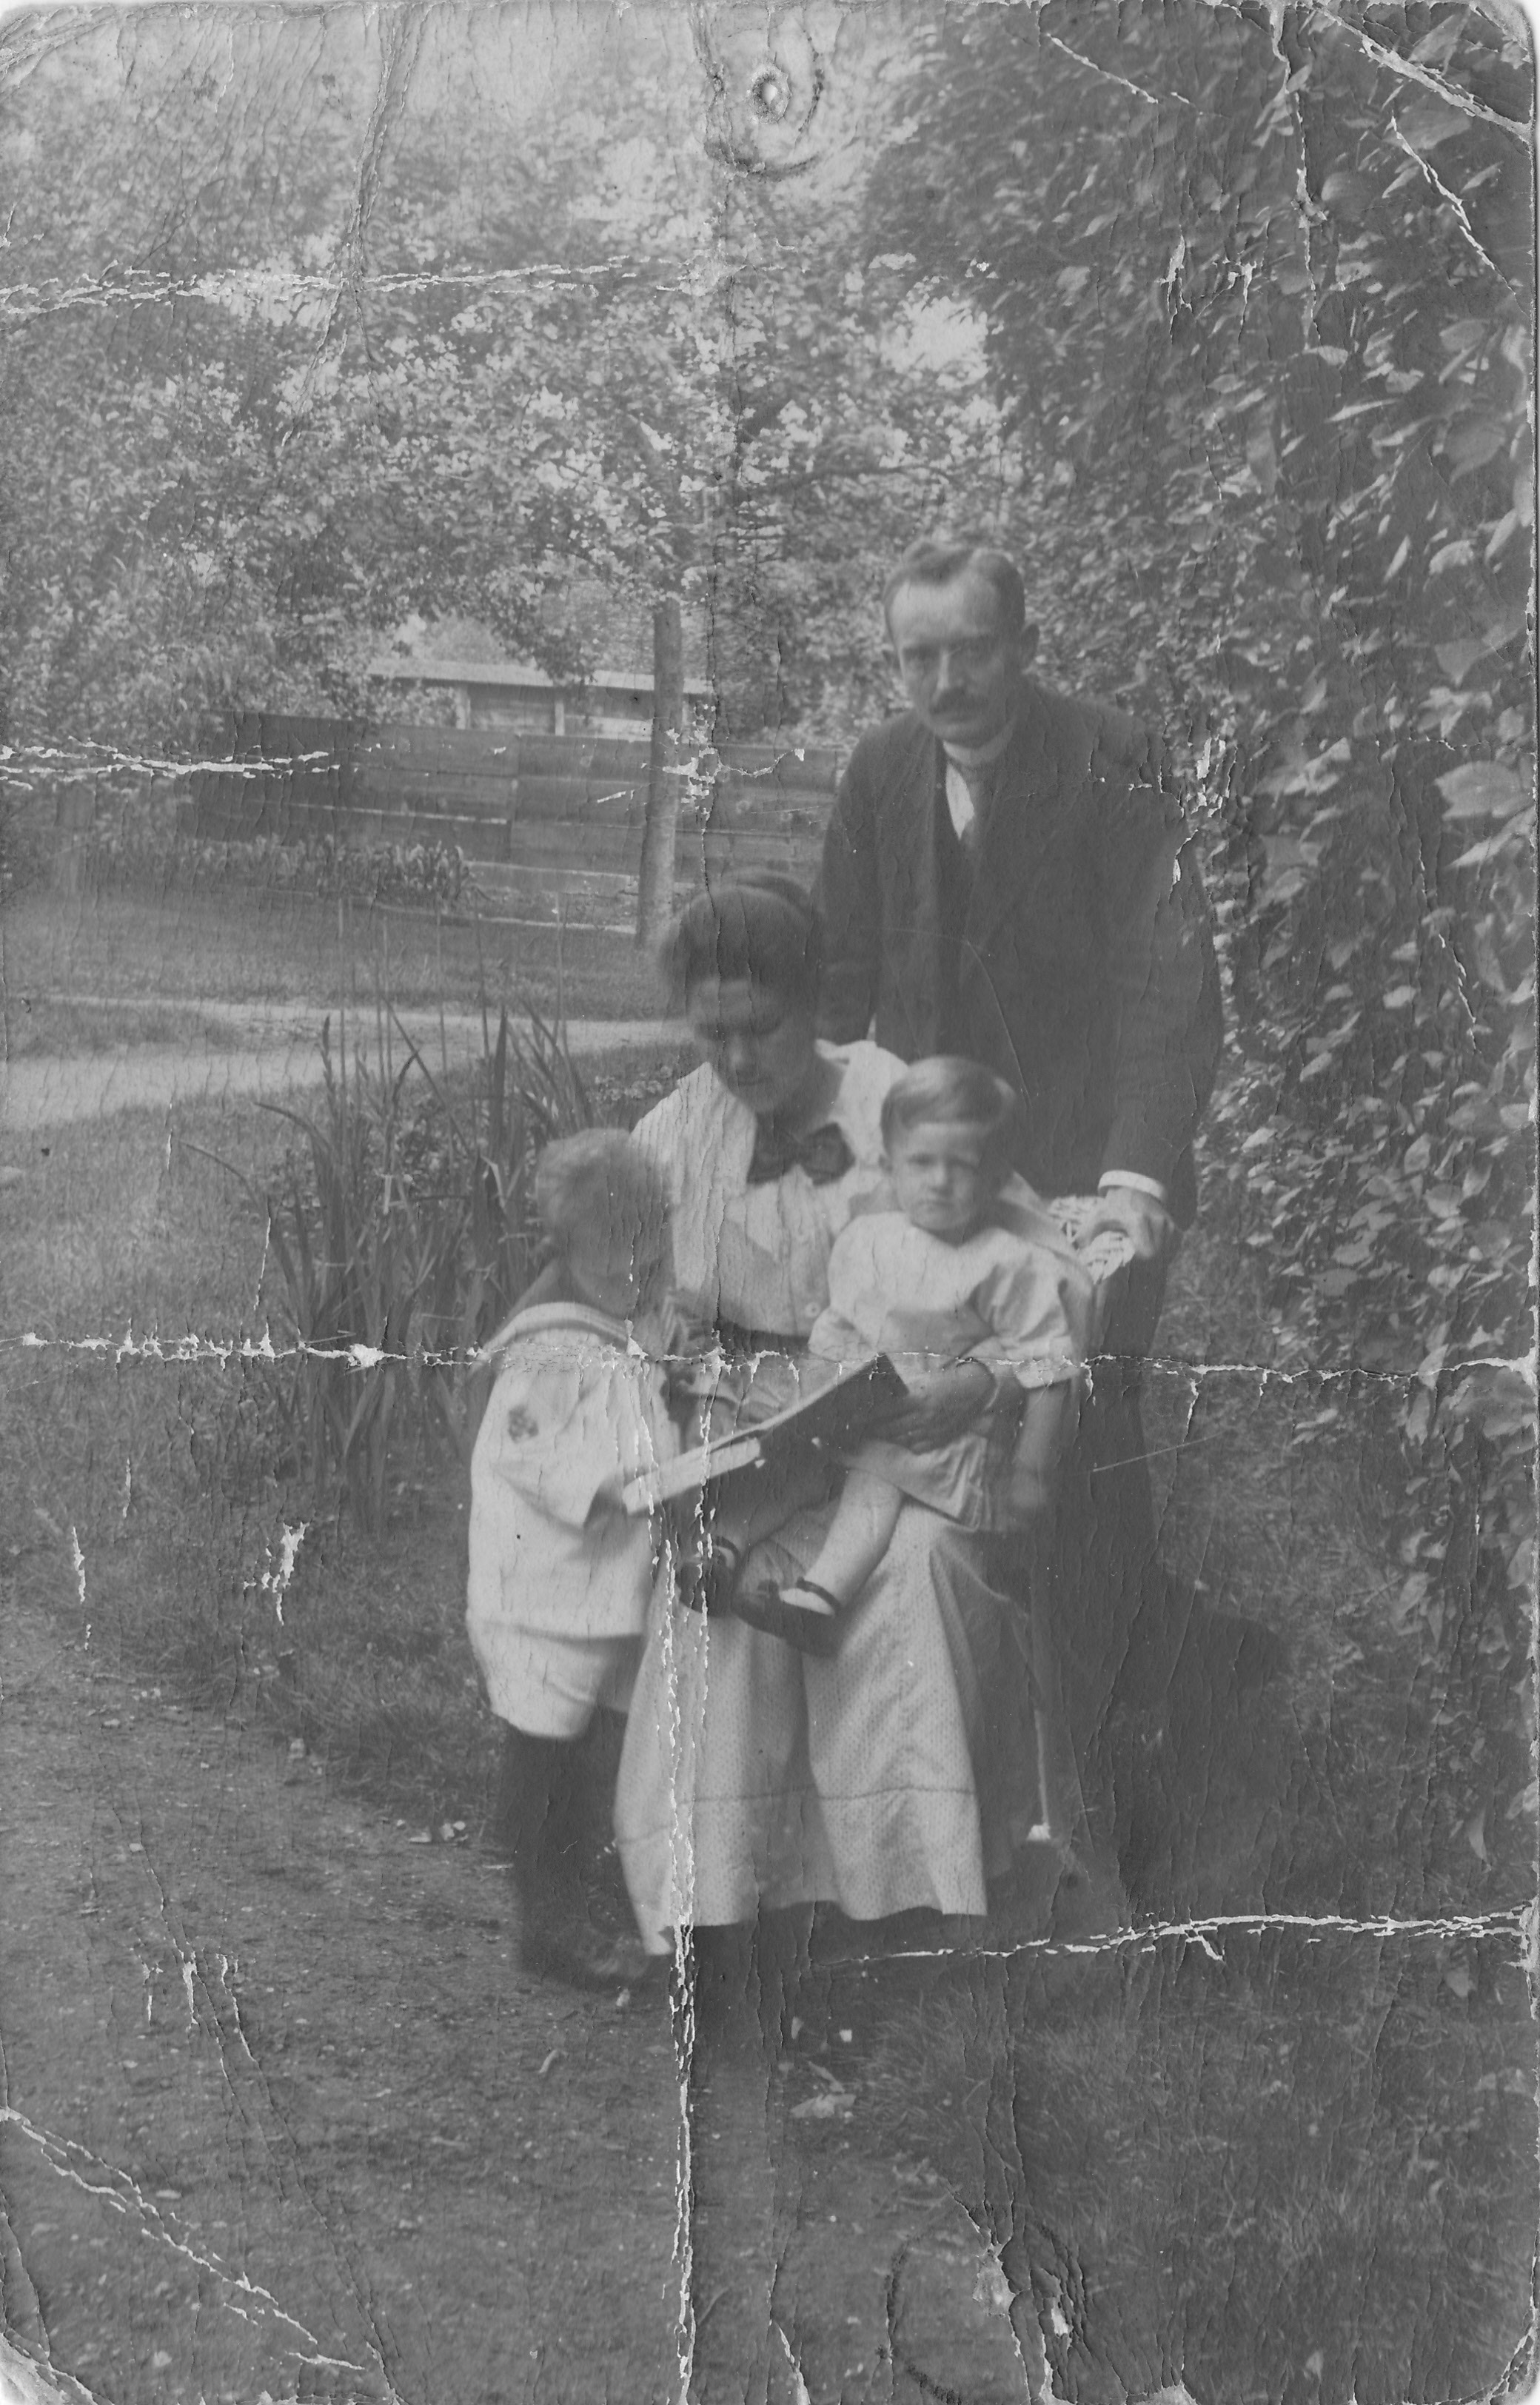 het jonge gezin Hugenholtz-Pouwelsen omstreeks 1918.